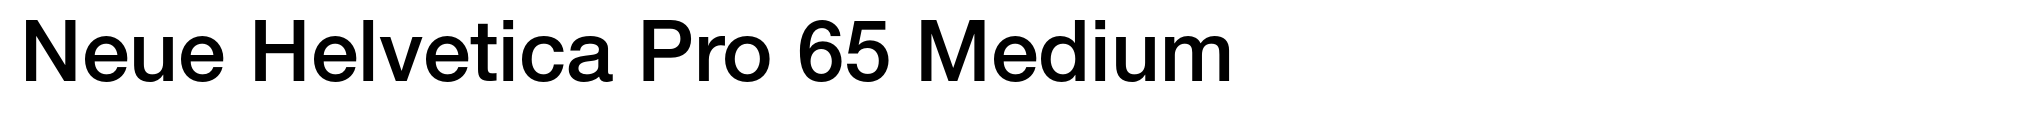 Neue Helvetica Pro 65 Medium image